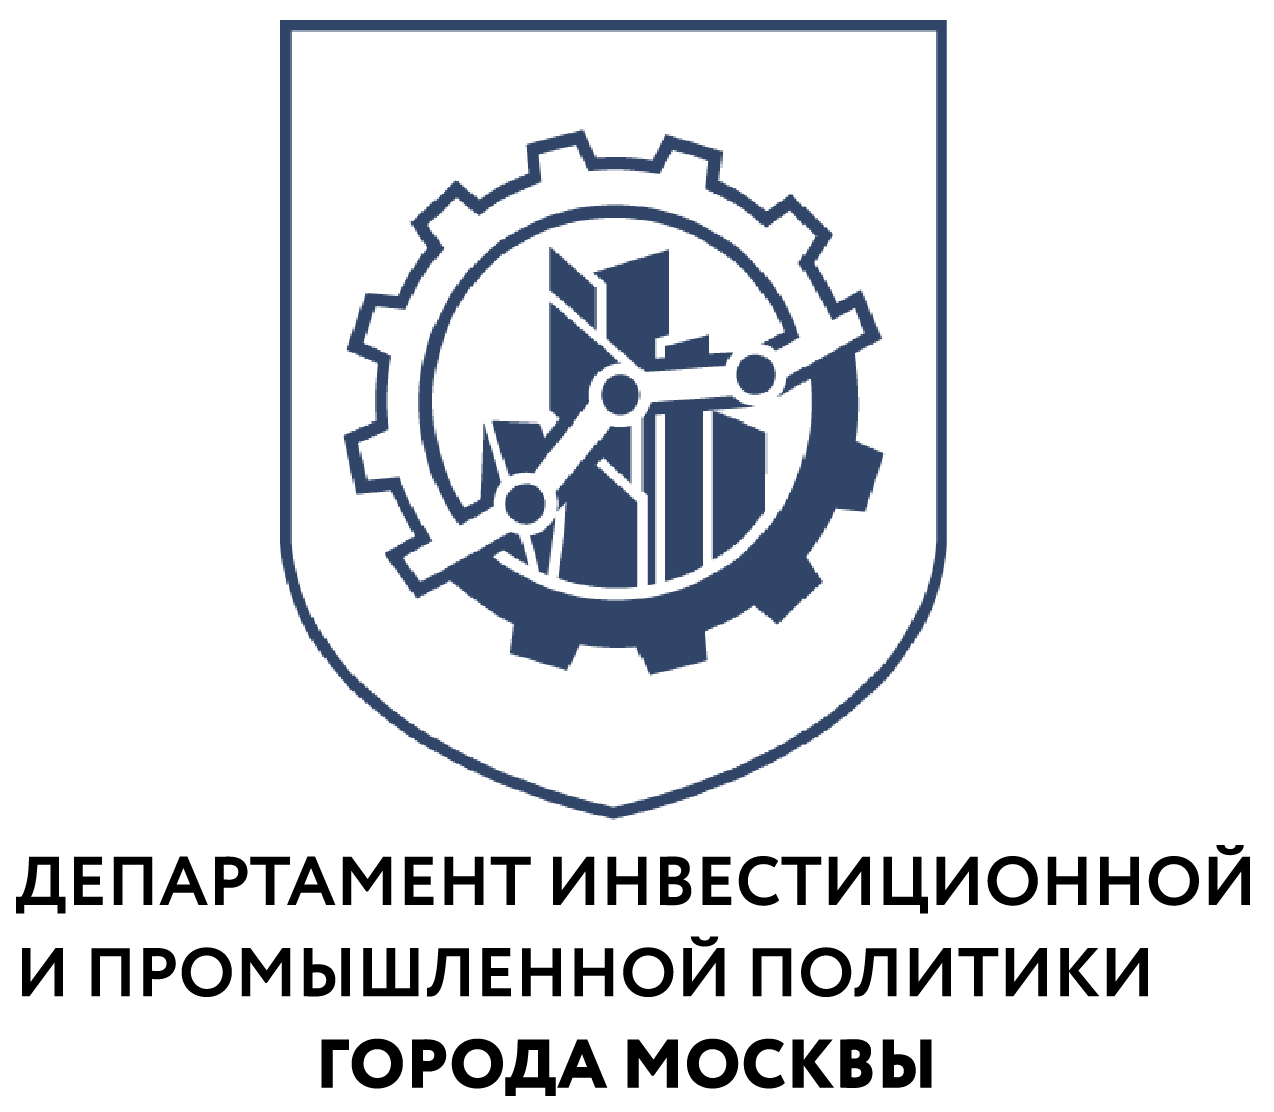 Город присвоил статус резидента ОЭЗ «Технополис Москва» производителю конденсаторов - фото 1